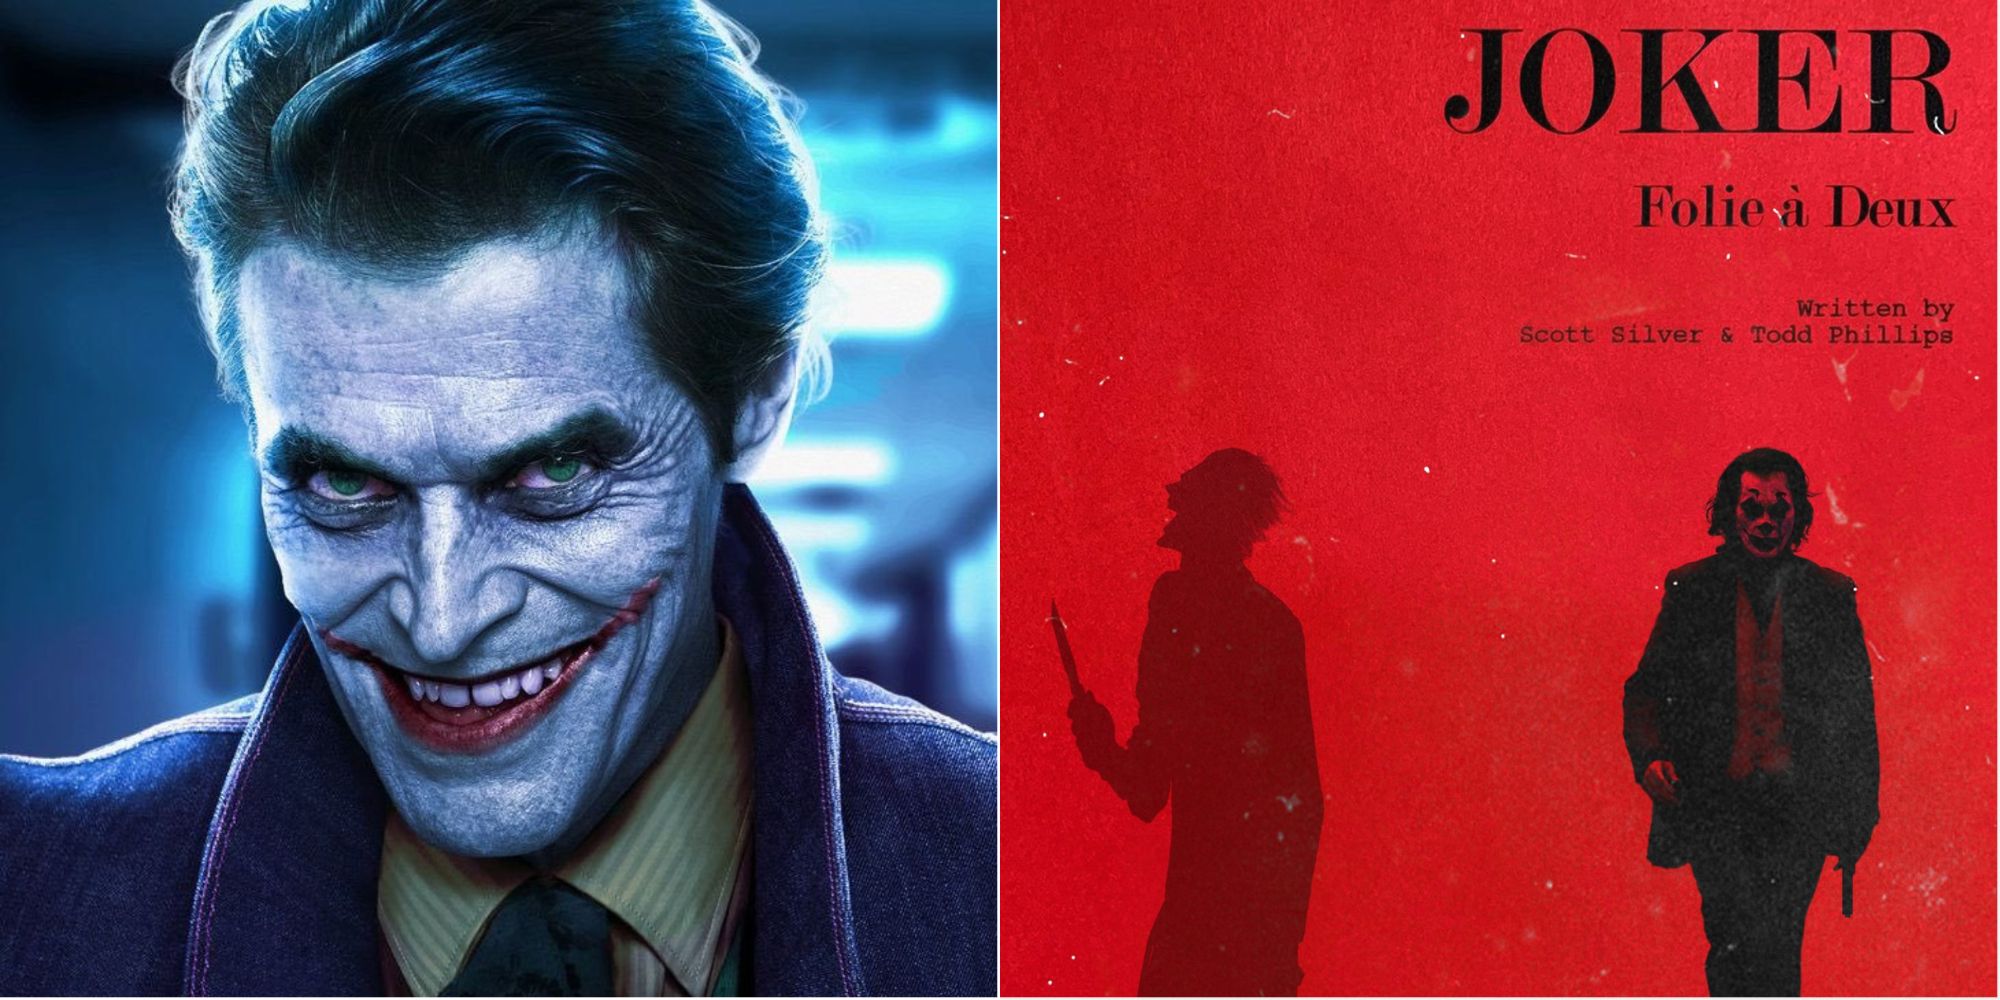 A split image of Willem Dafoe as the Joker and the poster for Joker 2